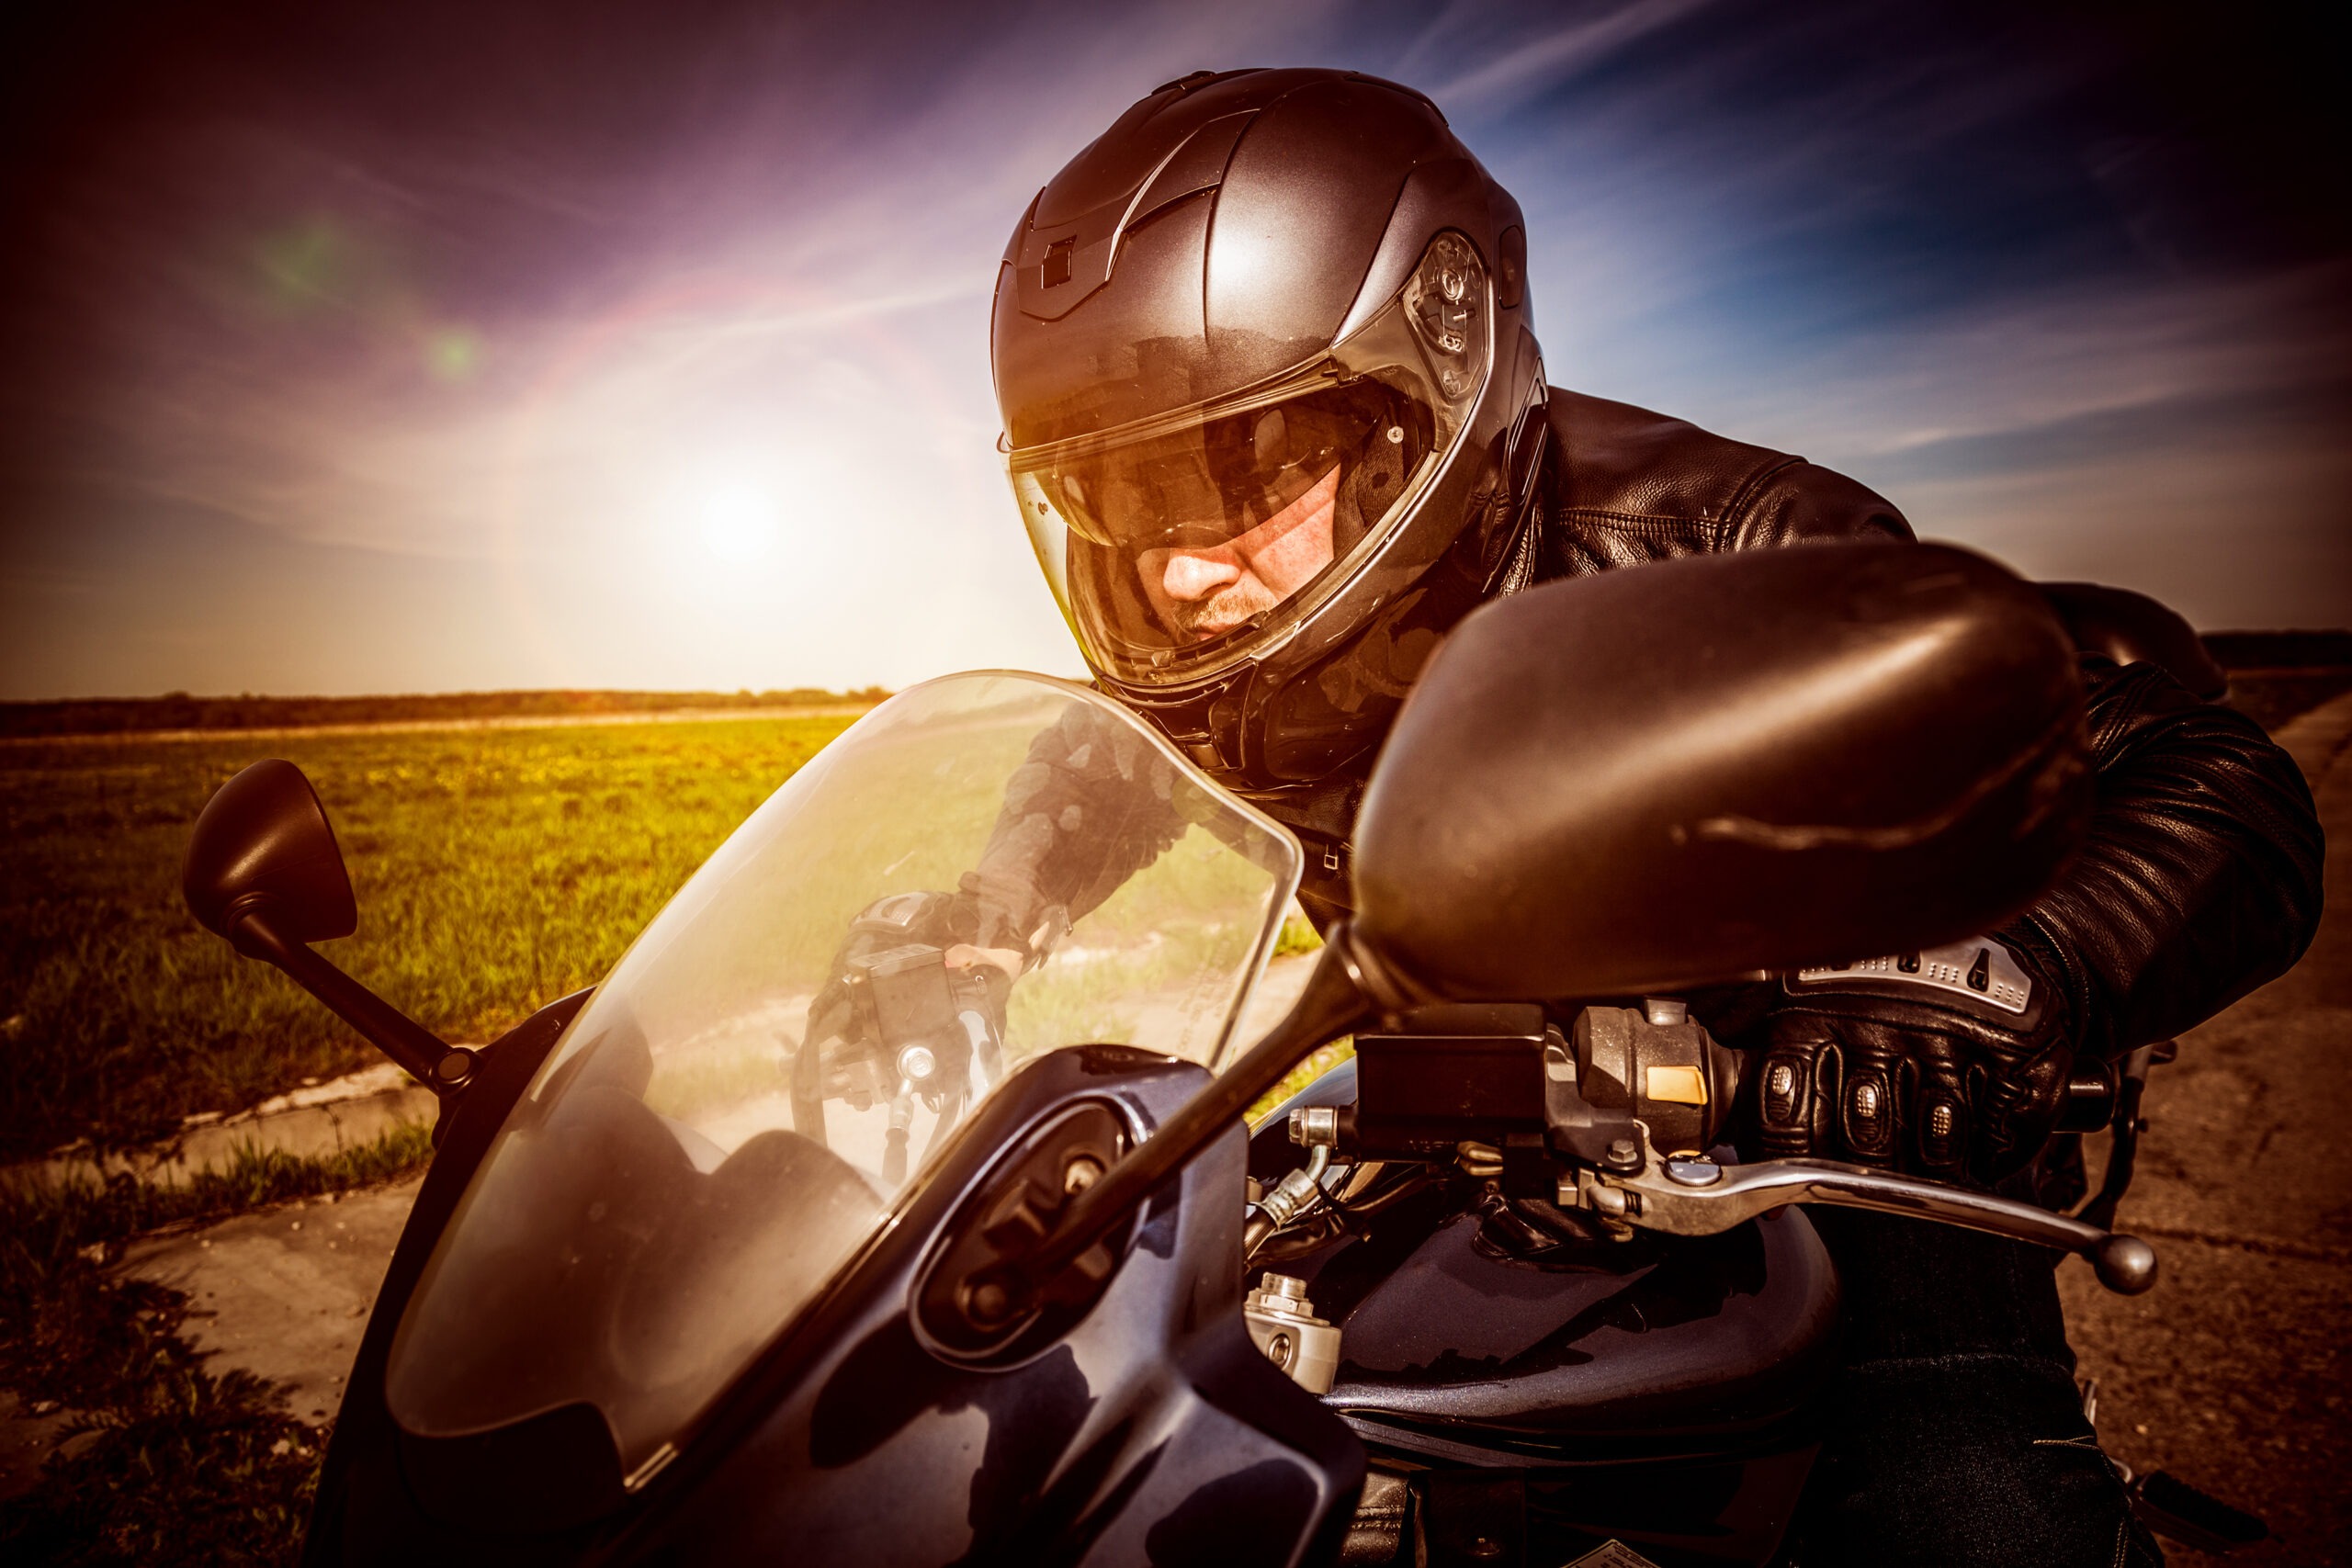 motorcyclist-riding-motorcycle-racing-handlebars